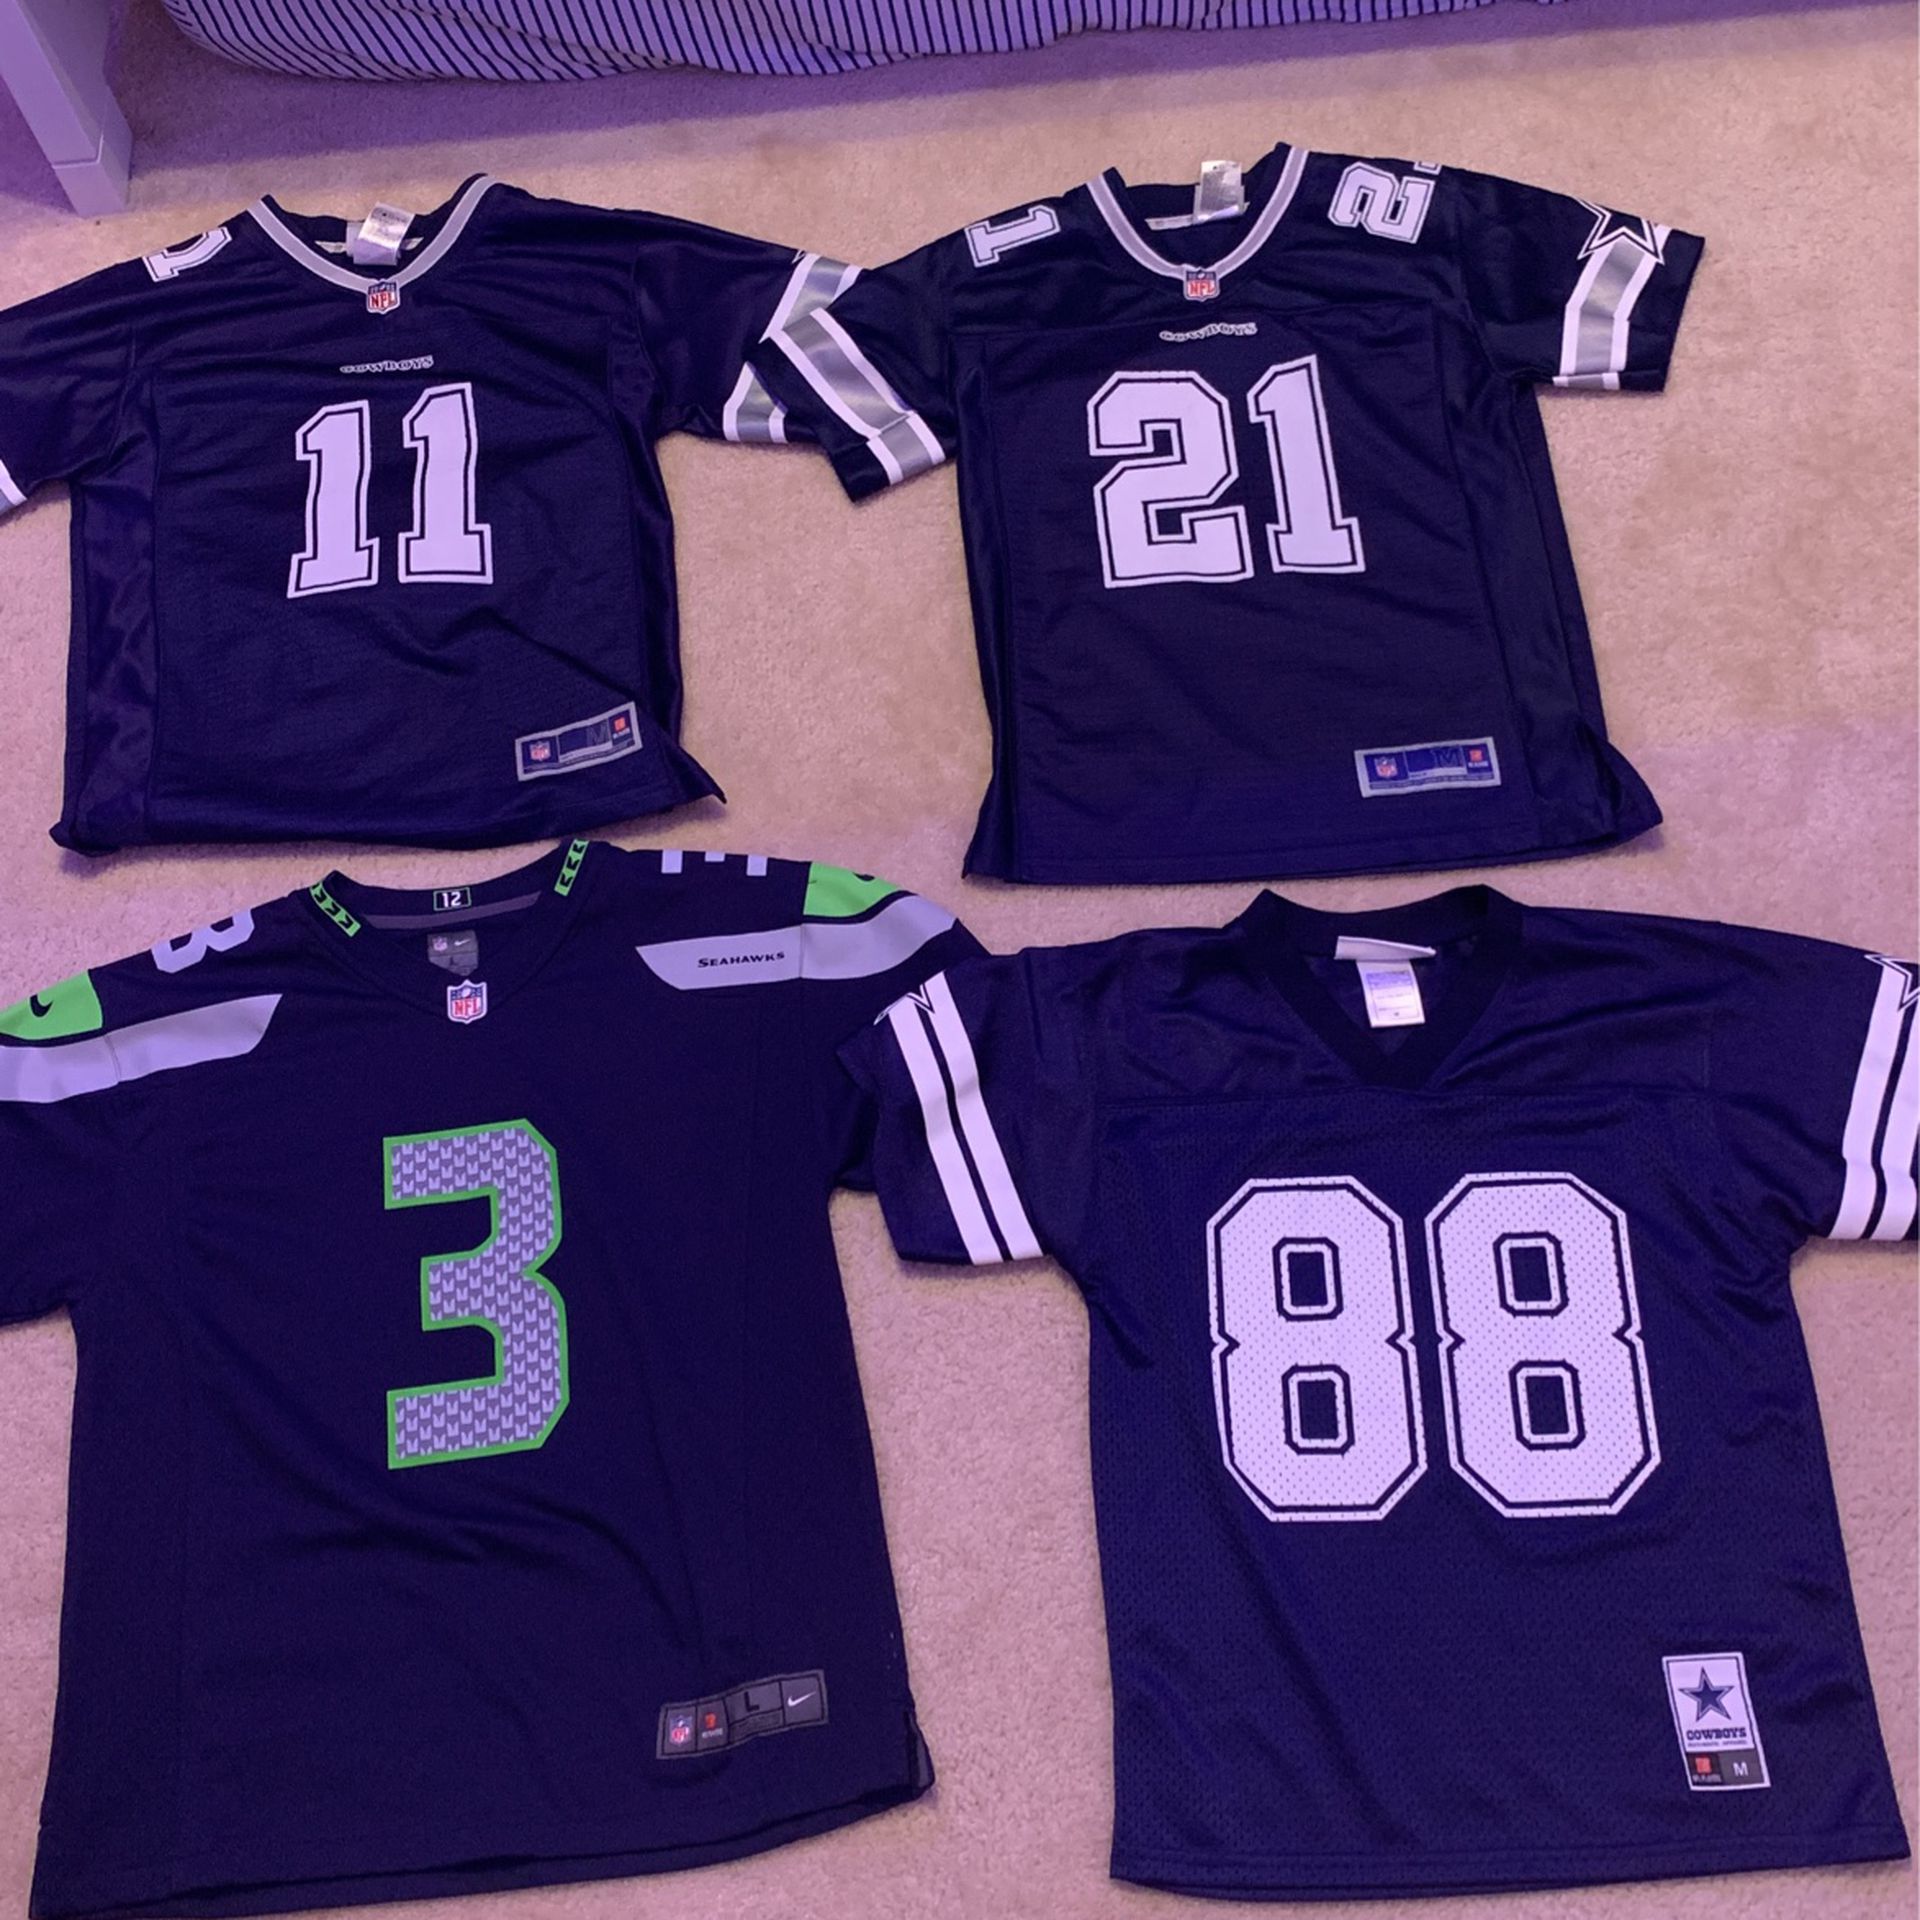 4 NFL jerseys